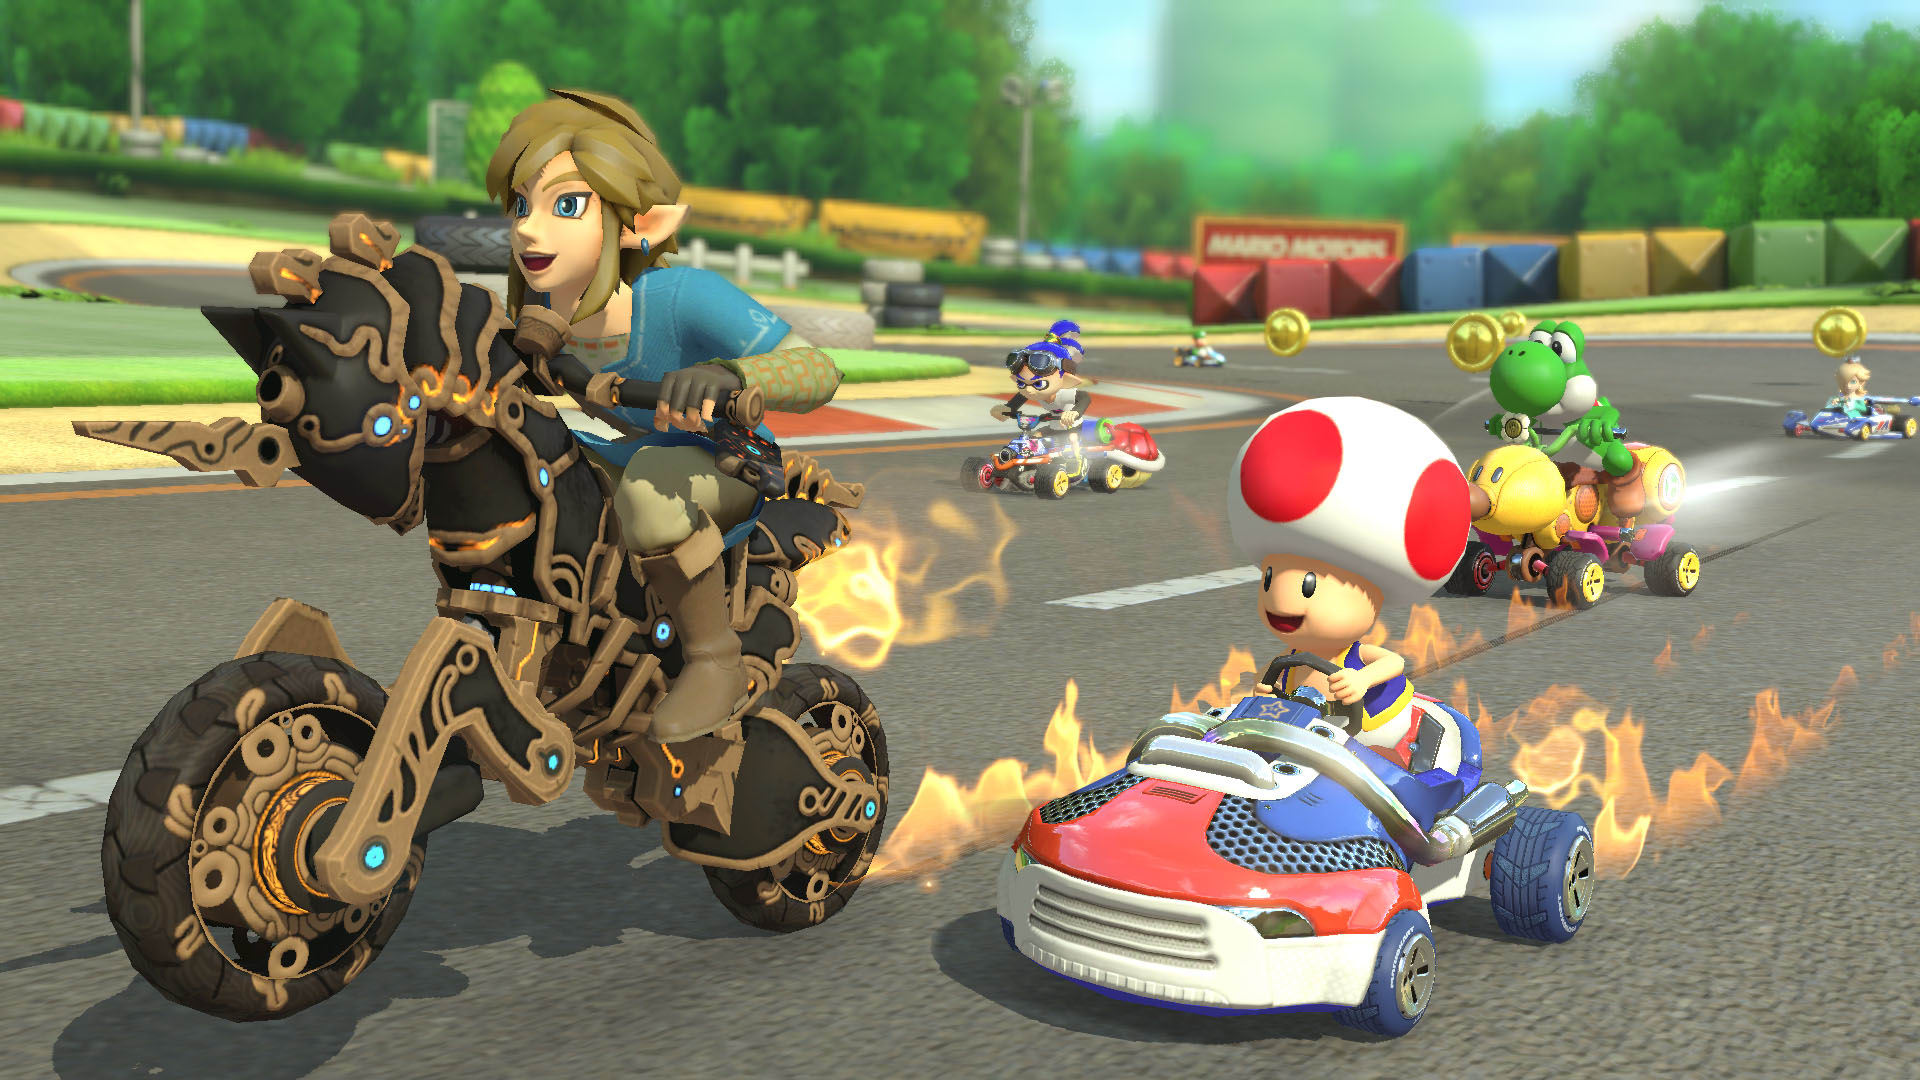 Video Game Mario Kart 8 Deluxe HD Wallpaper Background Image. 